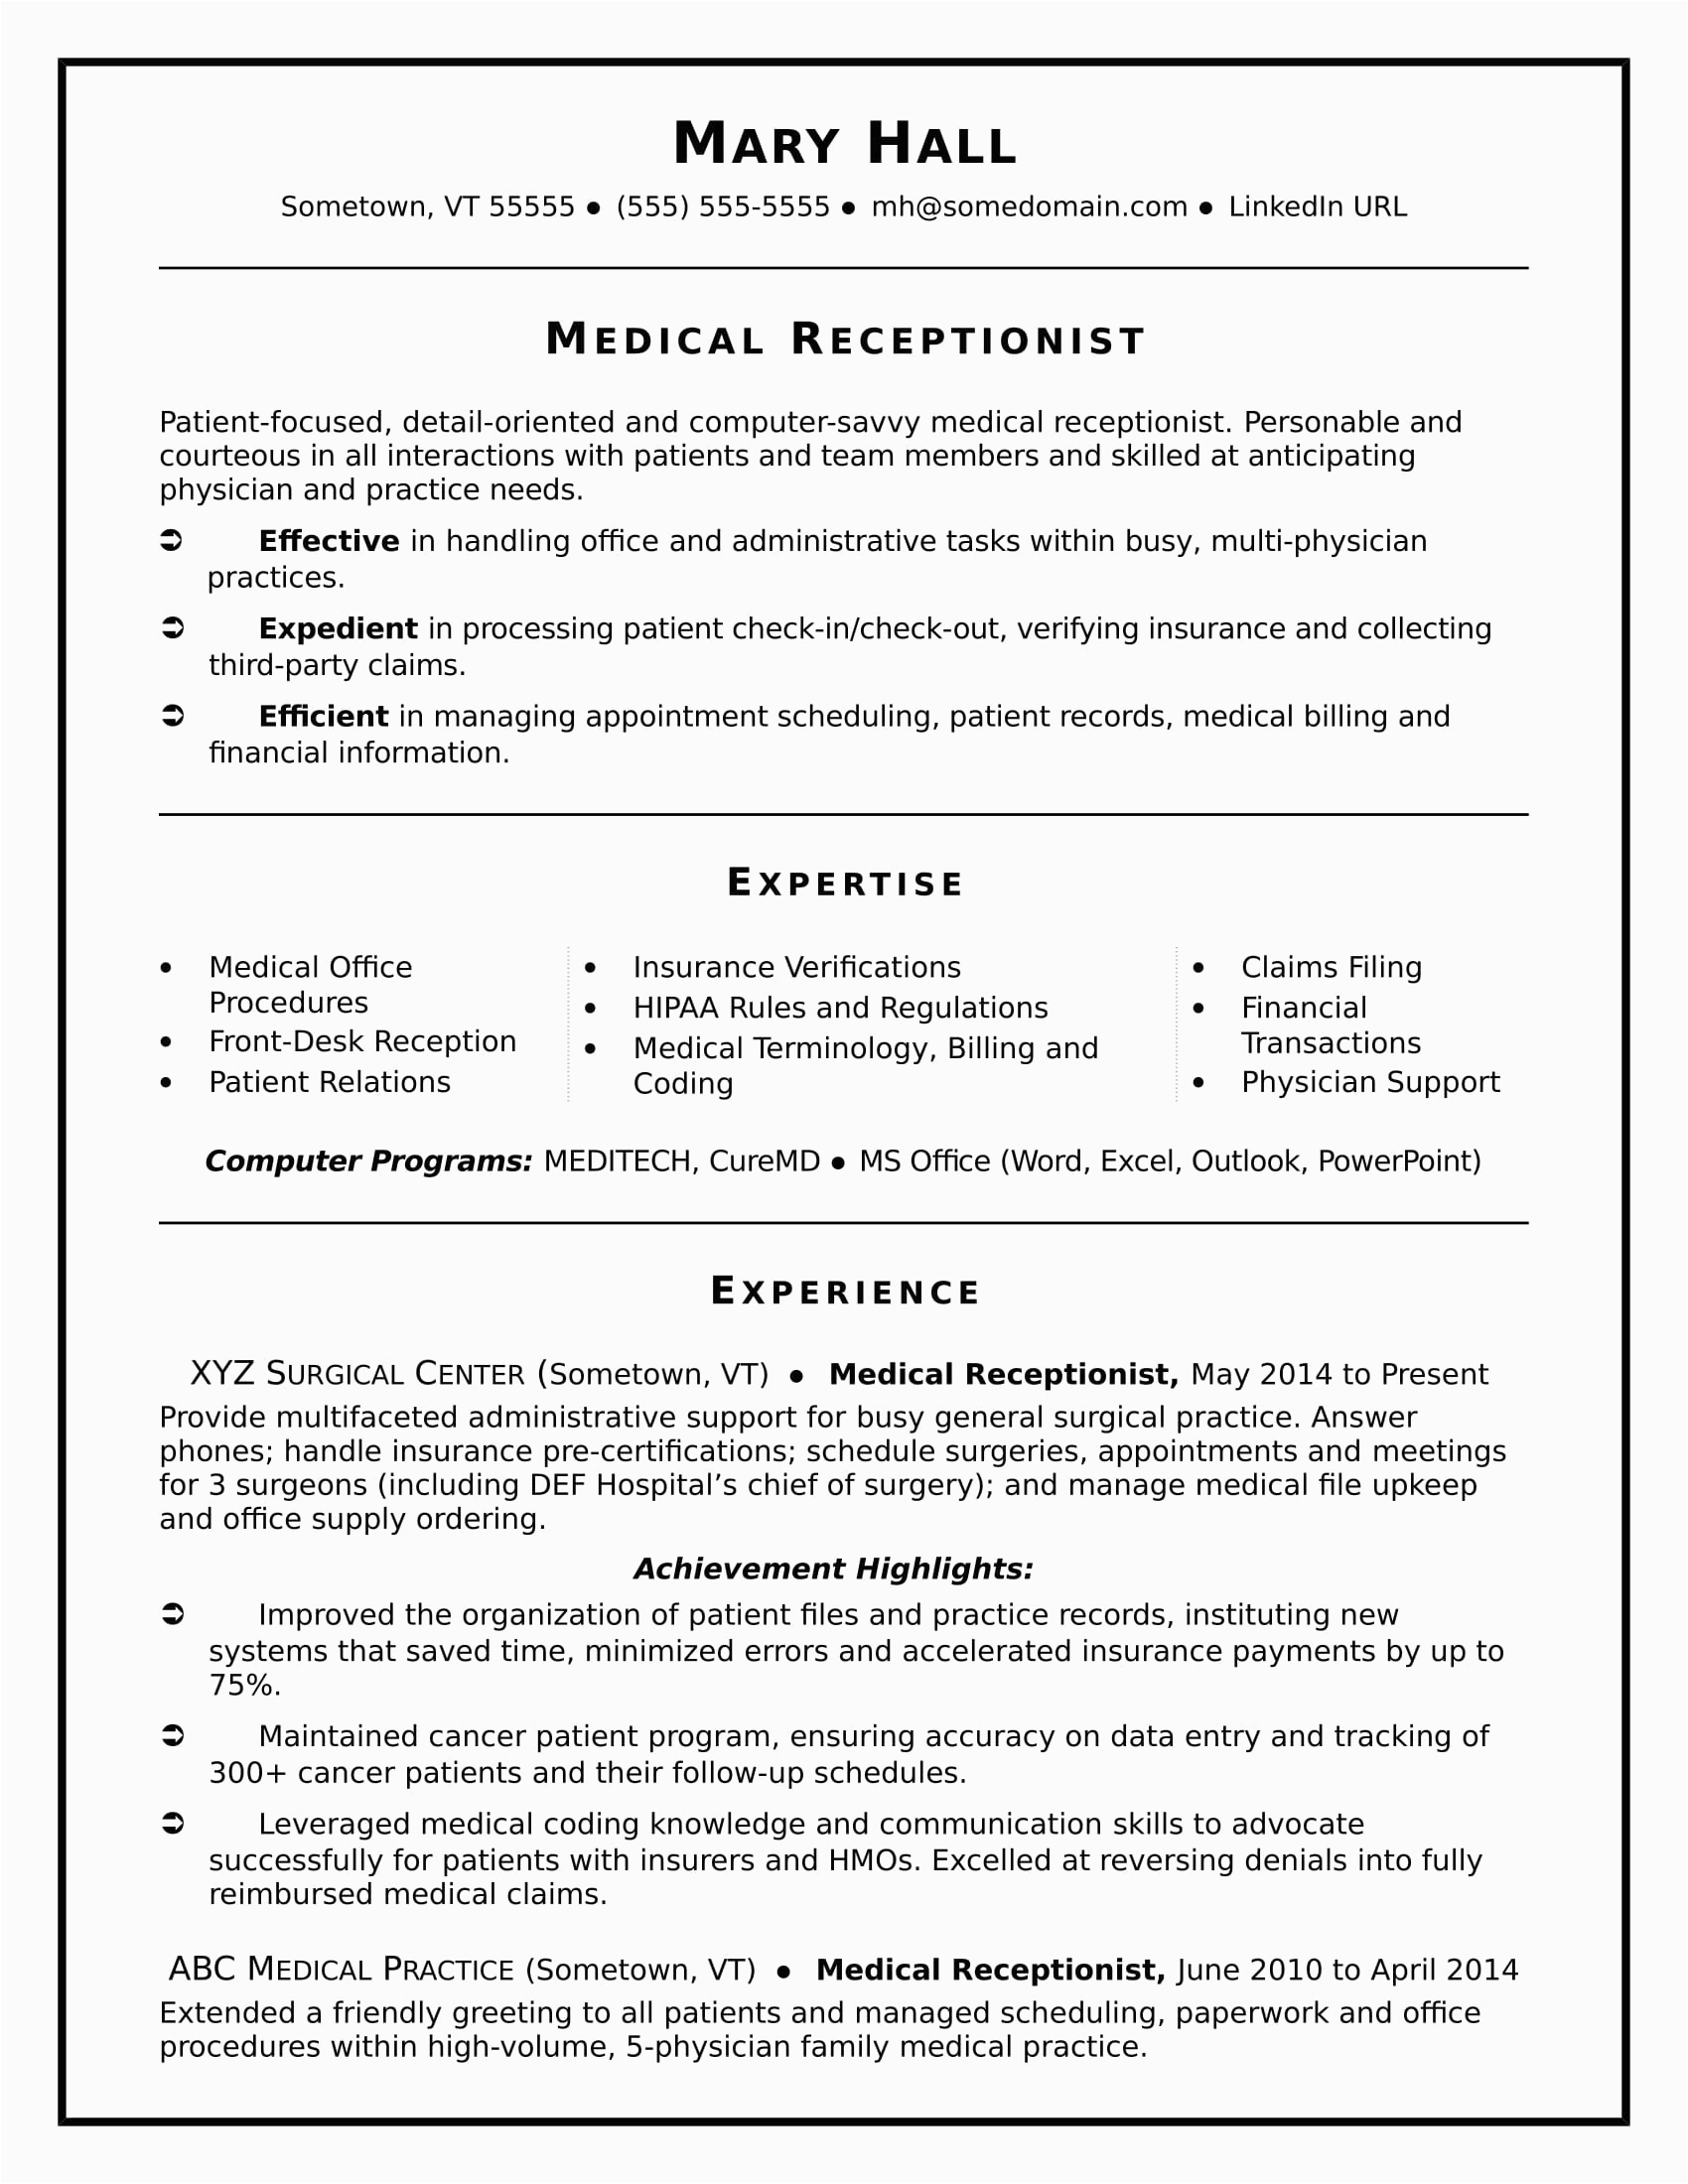 Sample Of Resume for Medical Receptionist Medical Receptionist Resume Sample